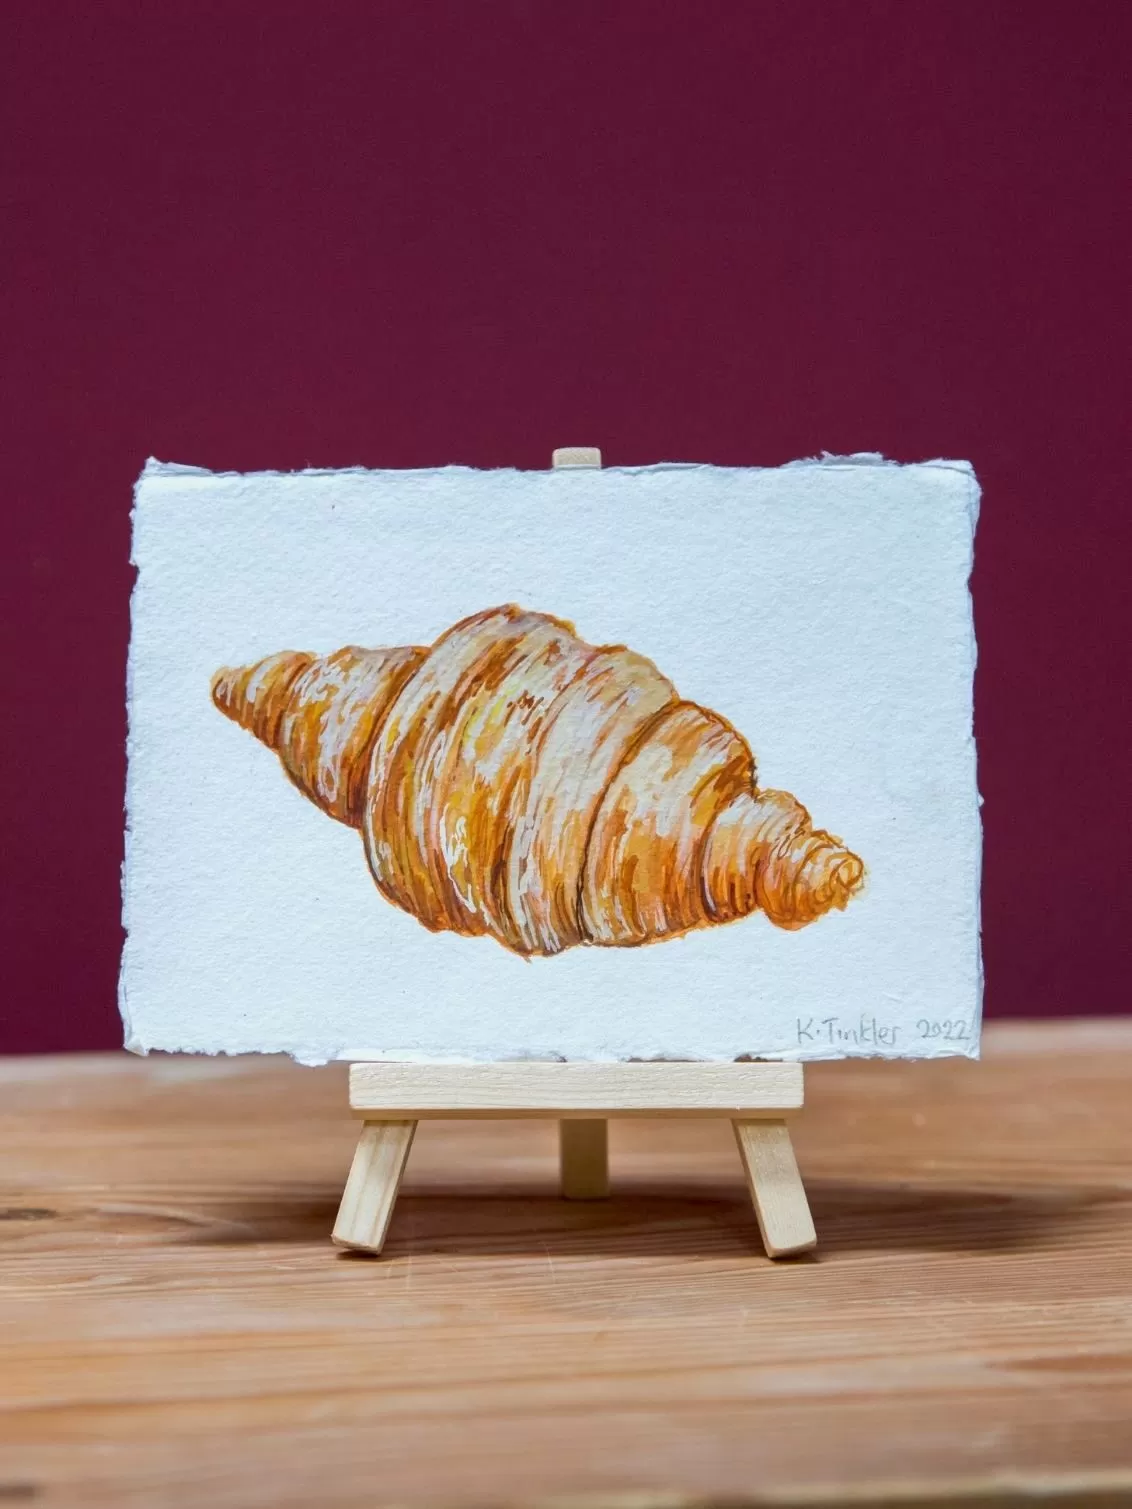 Katie Tinkler illustration of a Croissant.